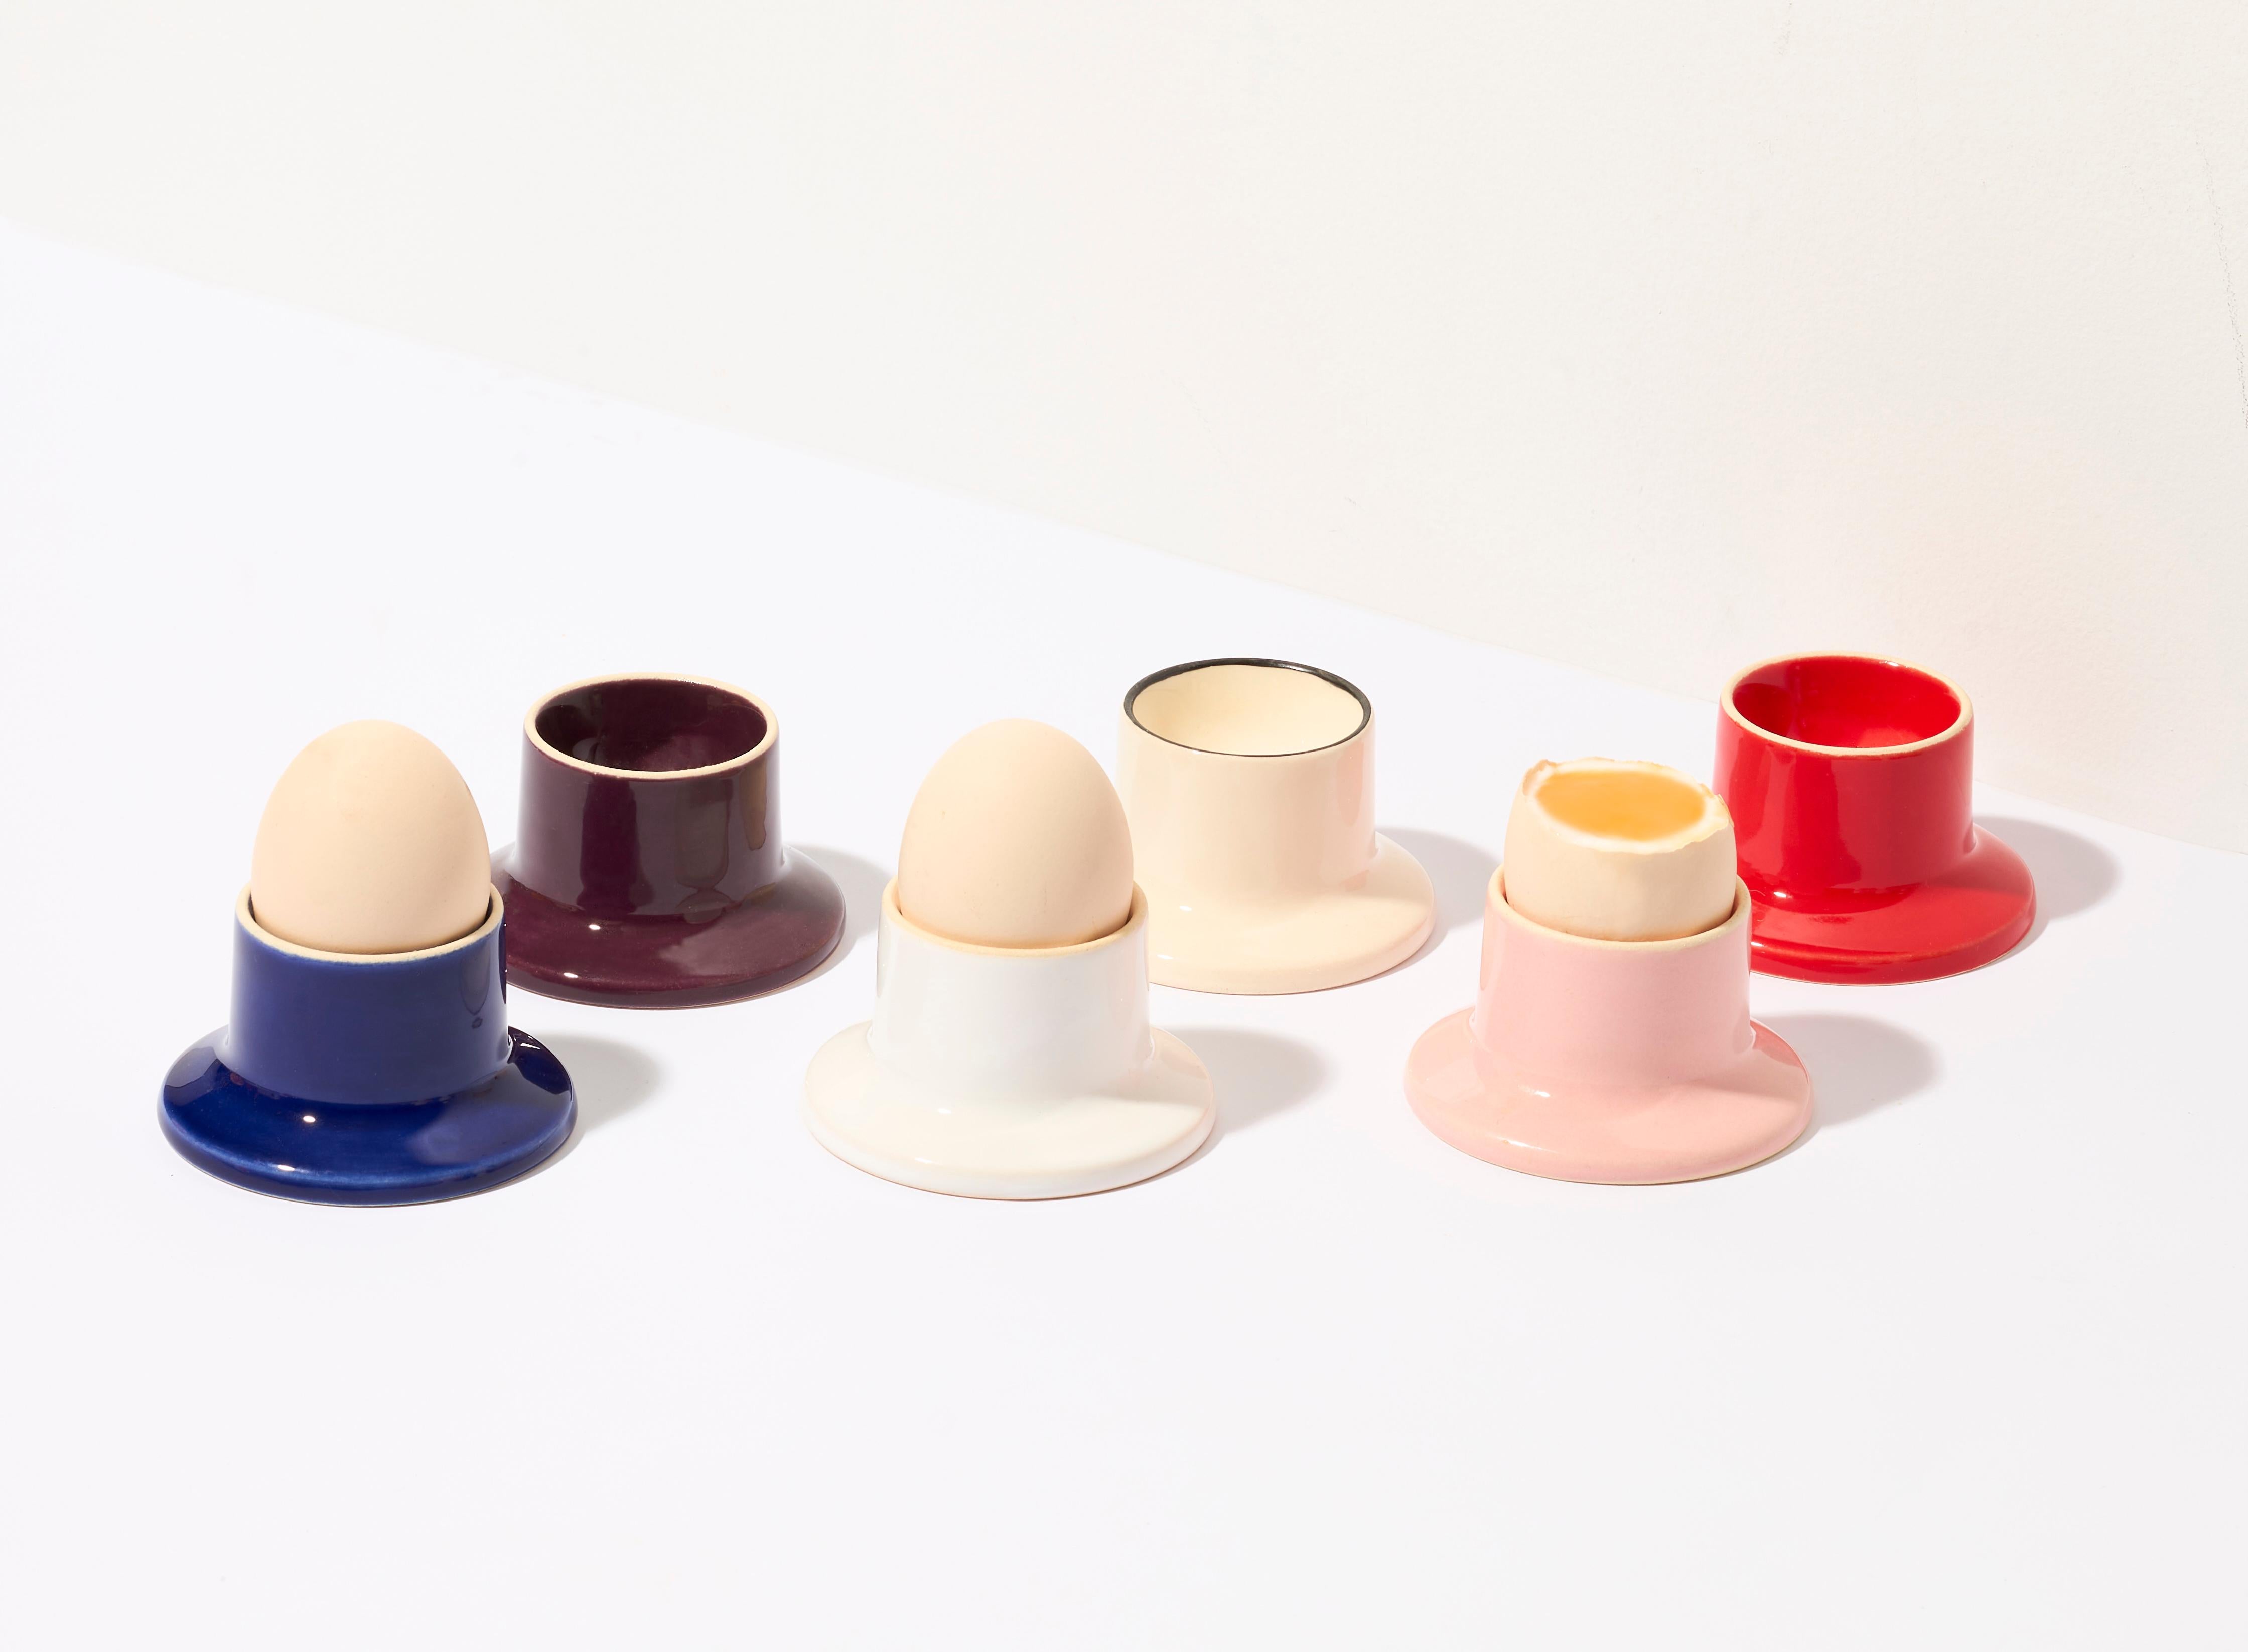 Glazed Egg holder / Kobalt / set of 2 by Malwina Konopacka For Sale